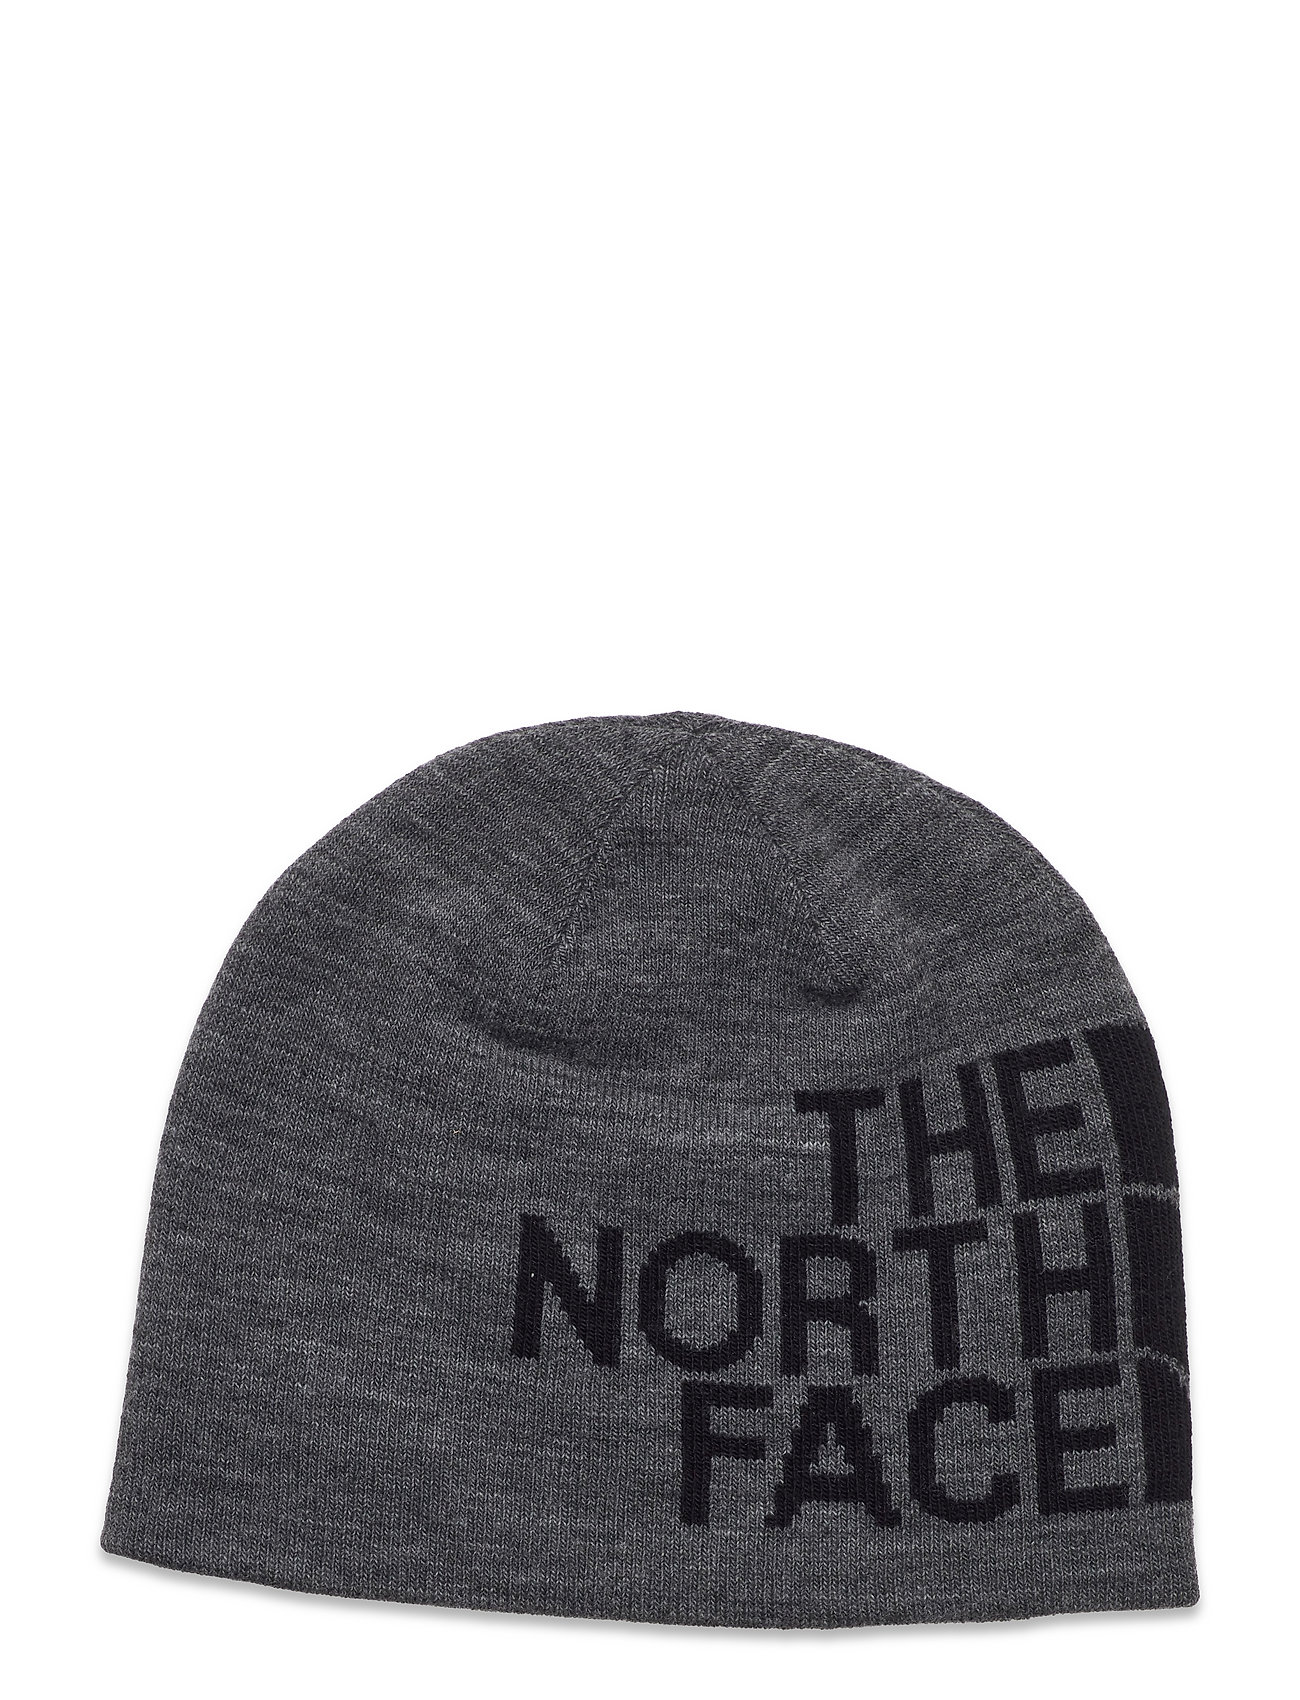 Rvsbl Tnf Banner Bne Accessories Headwear Harmaa The North Face